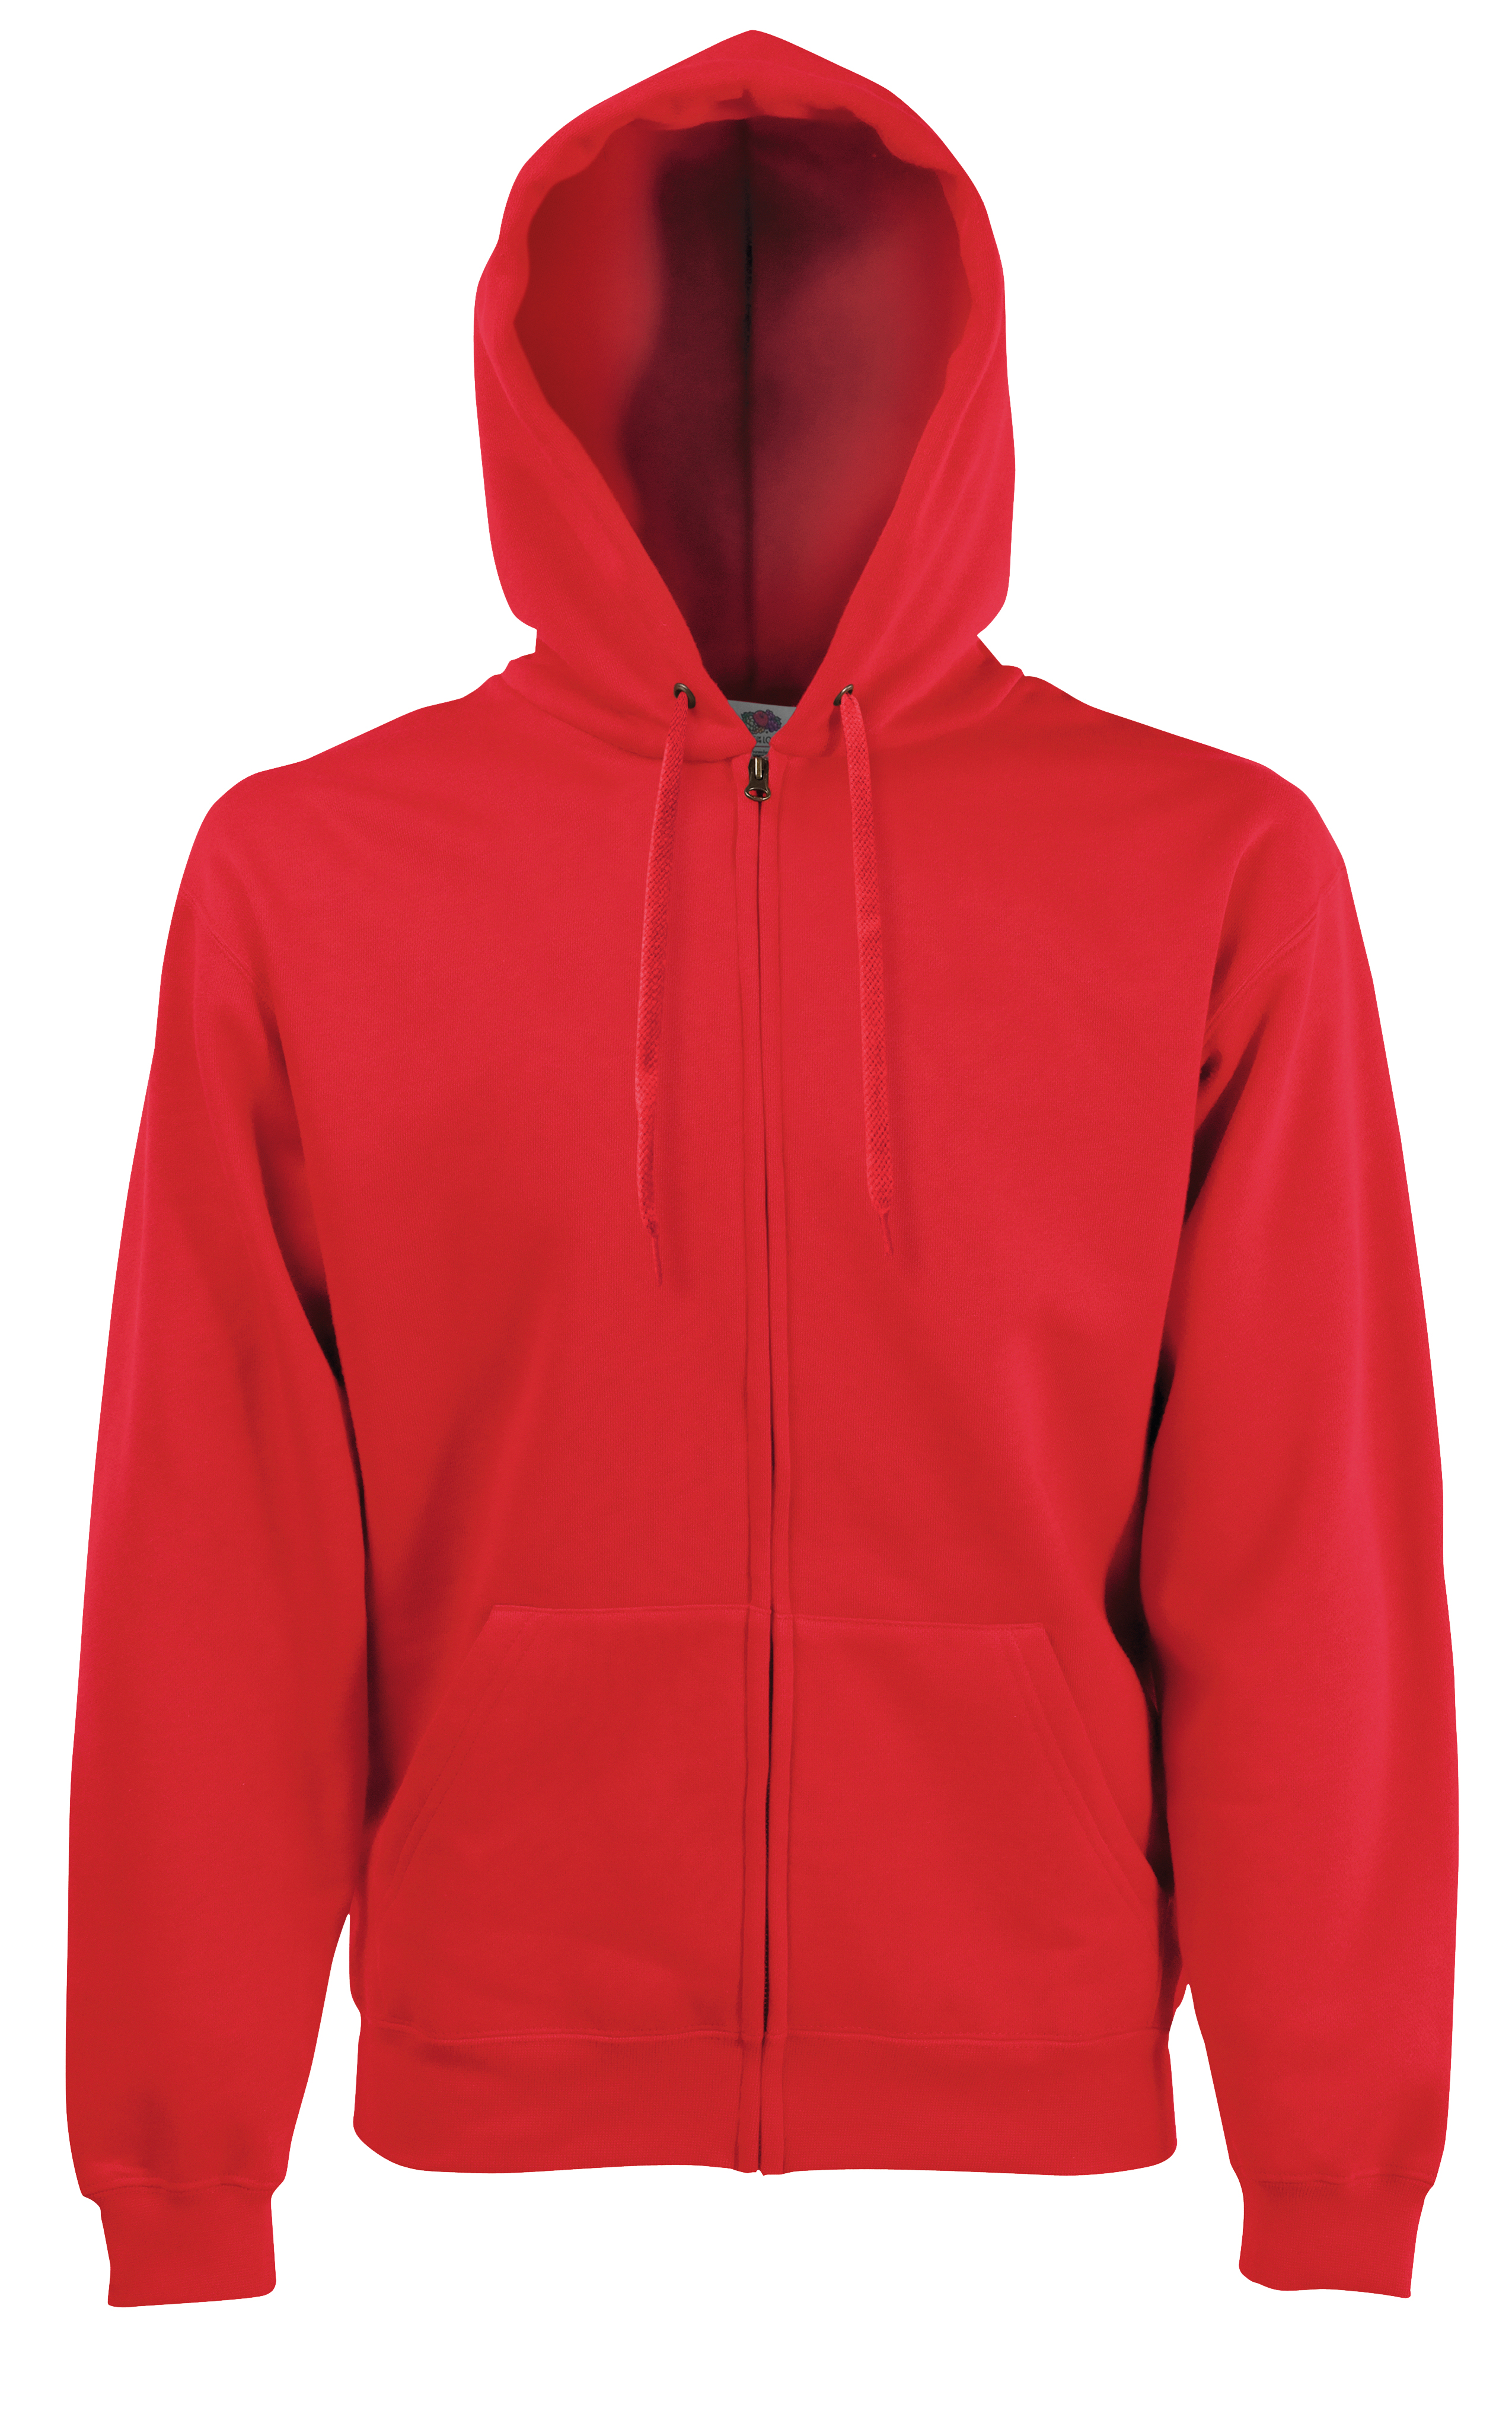 ax-httpswebsystems.s3.amazonaws.comtmp_for_downloadfruit-of-the-loom-premium-70-30-hooded-sweatshirt-jacket-red.jpeg